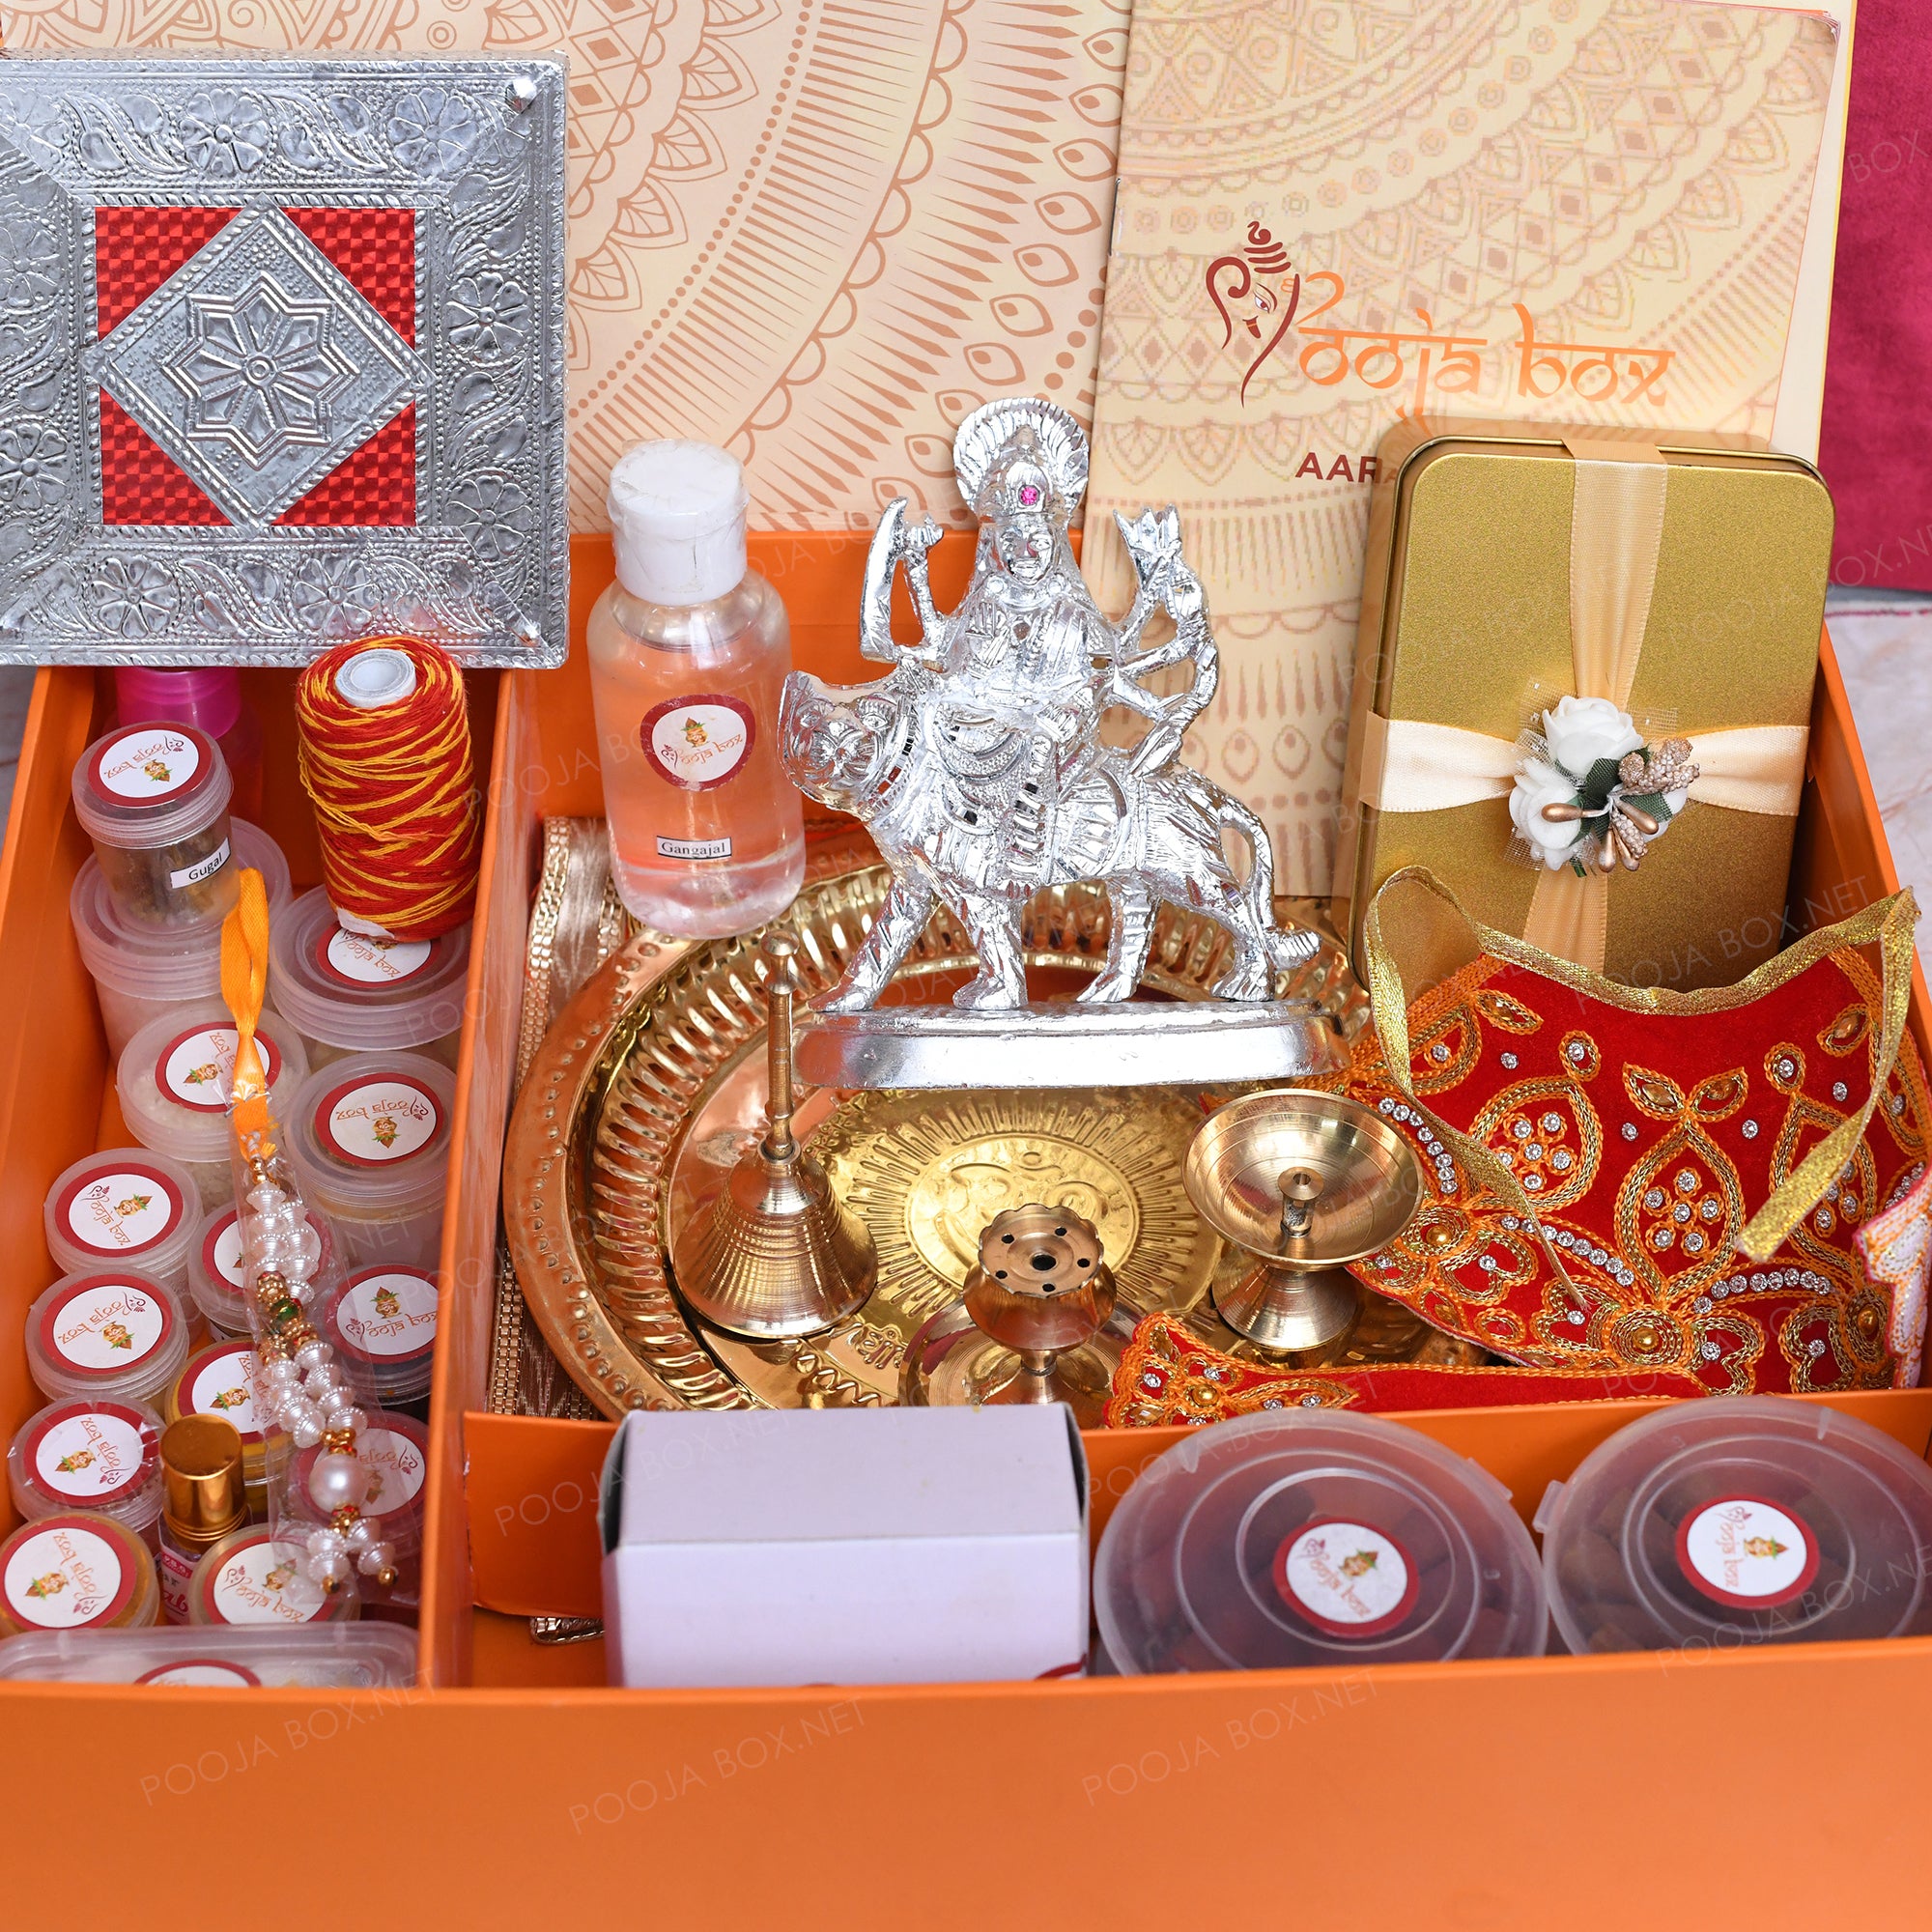 Spiritual Maa Durga Navratri Pooja Box